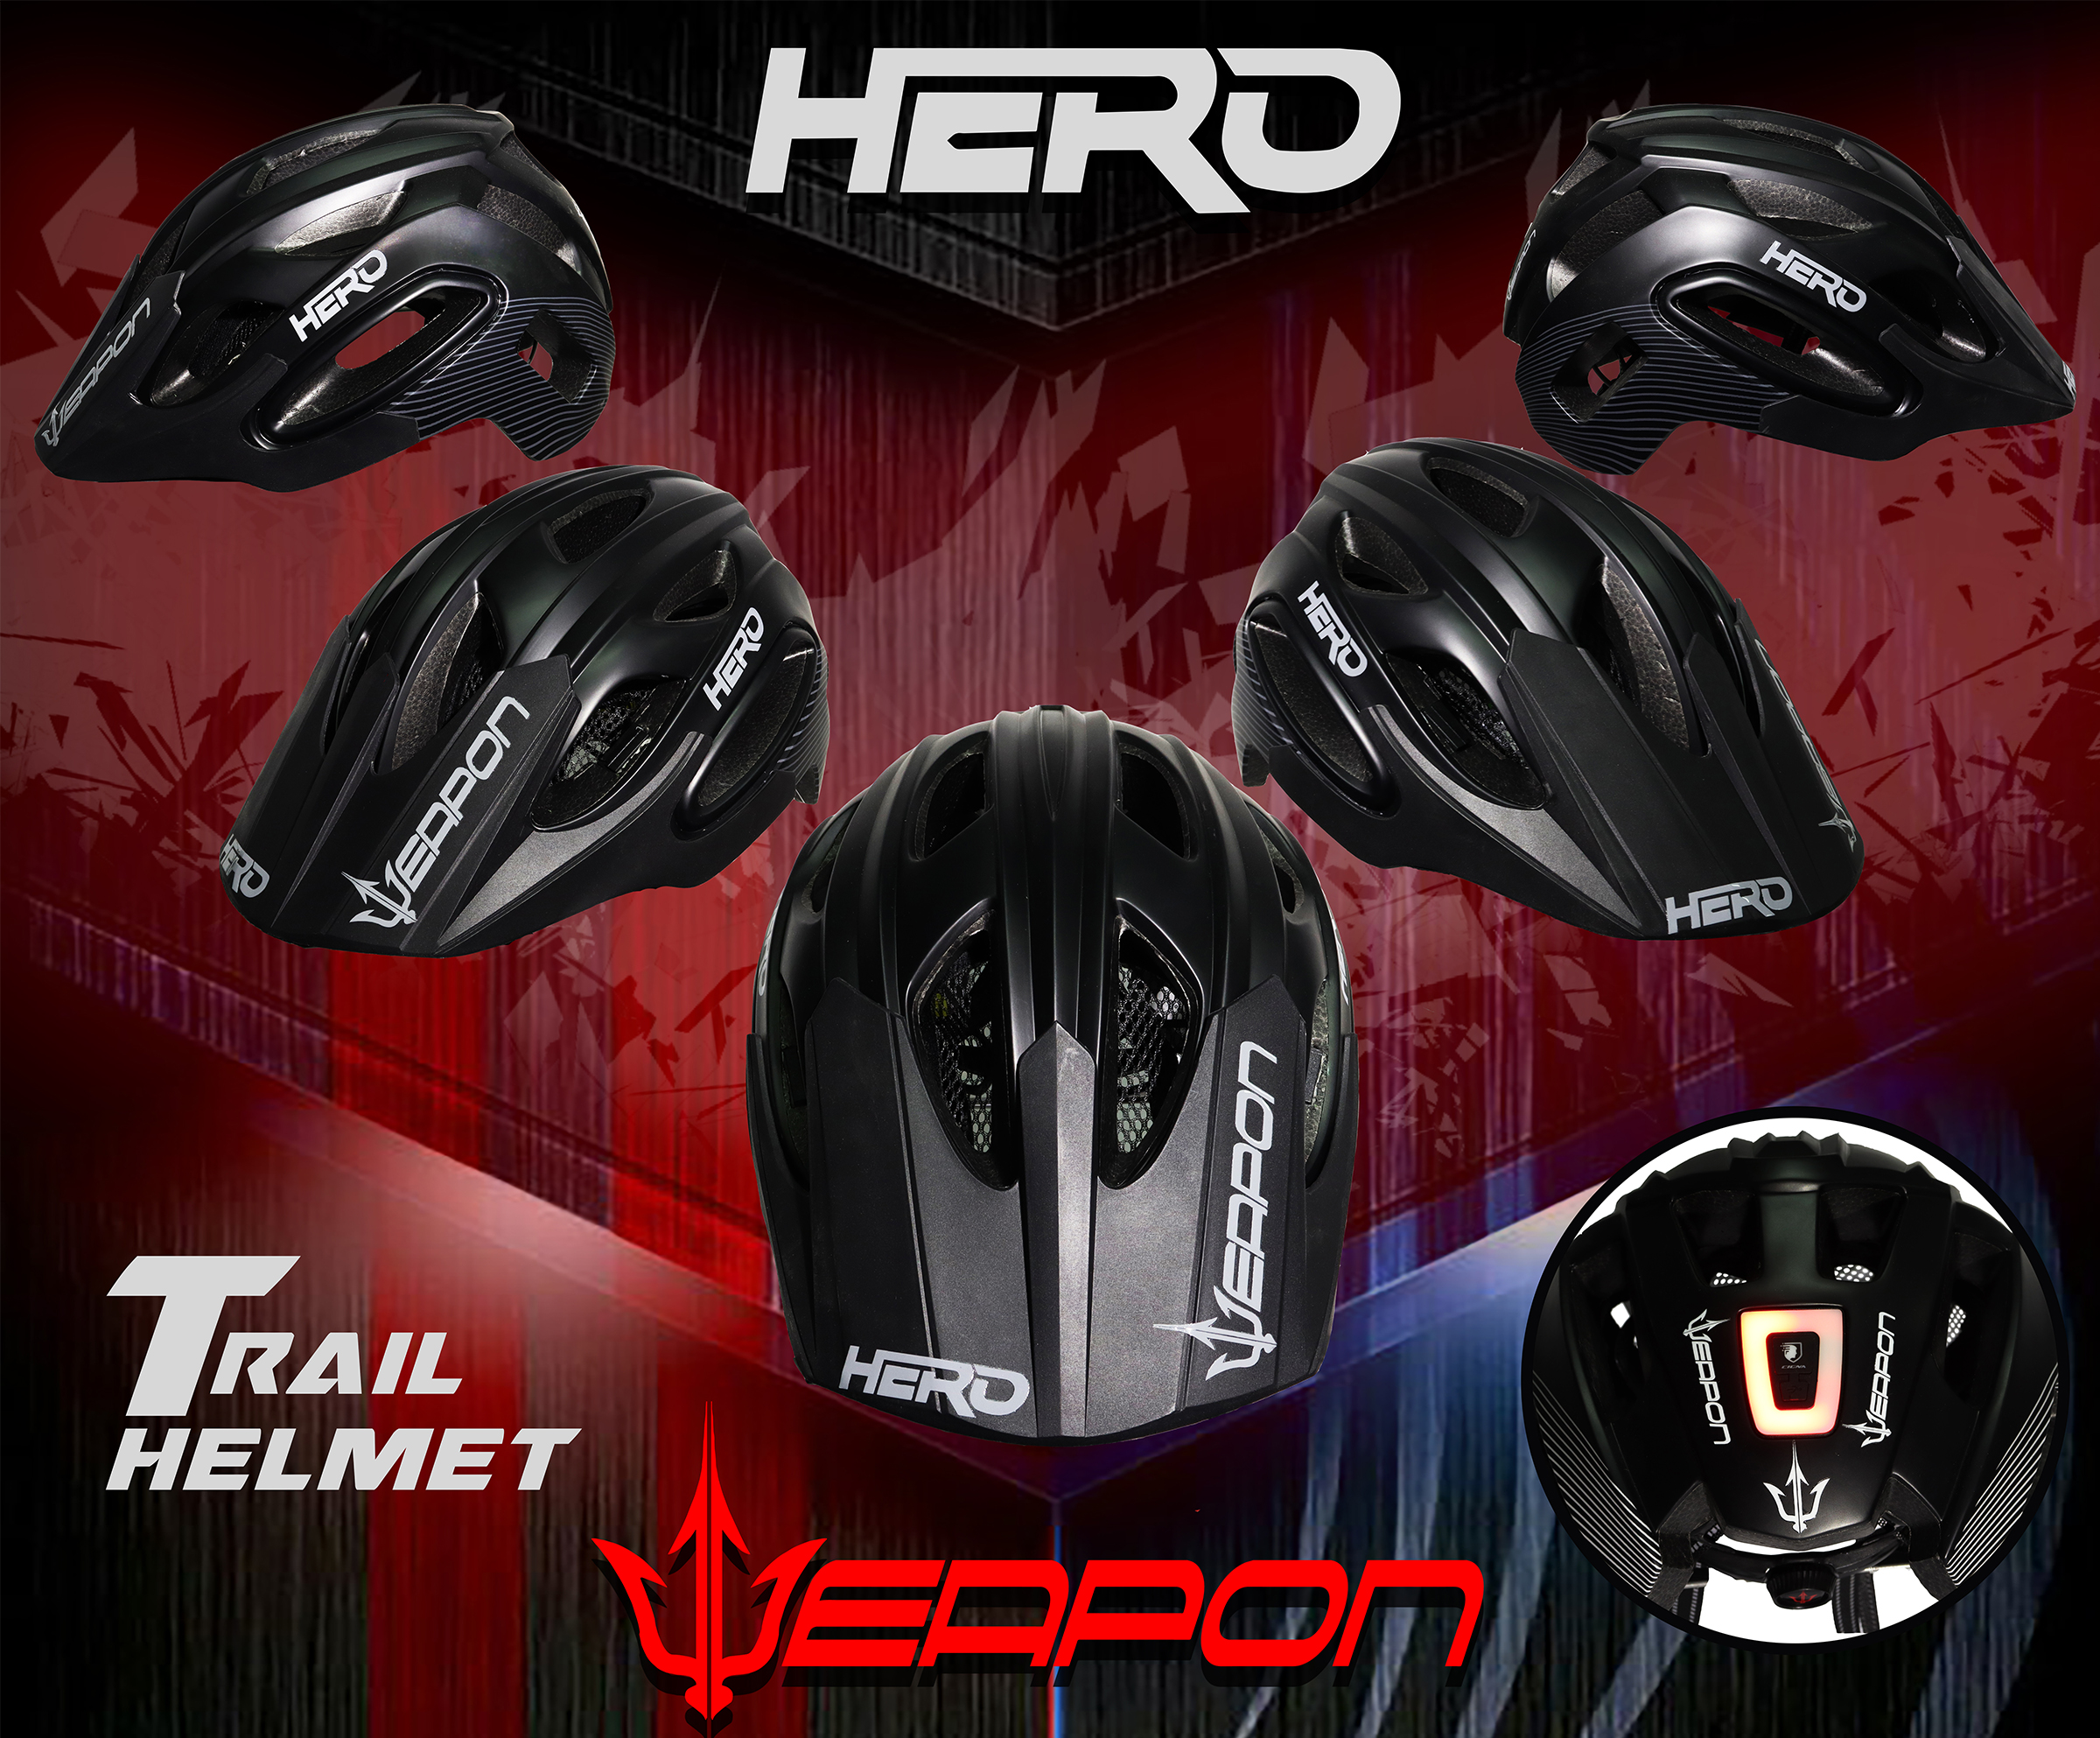 hero-helmet-ads4